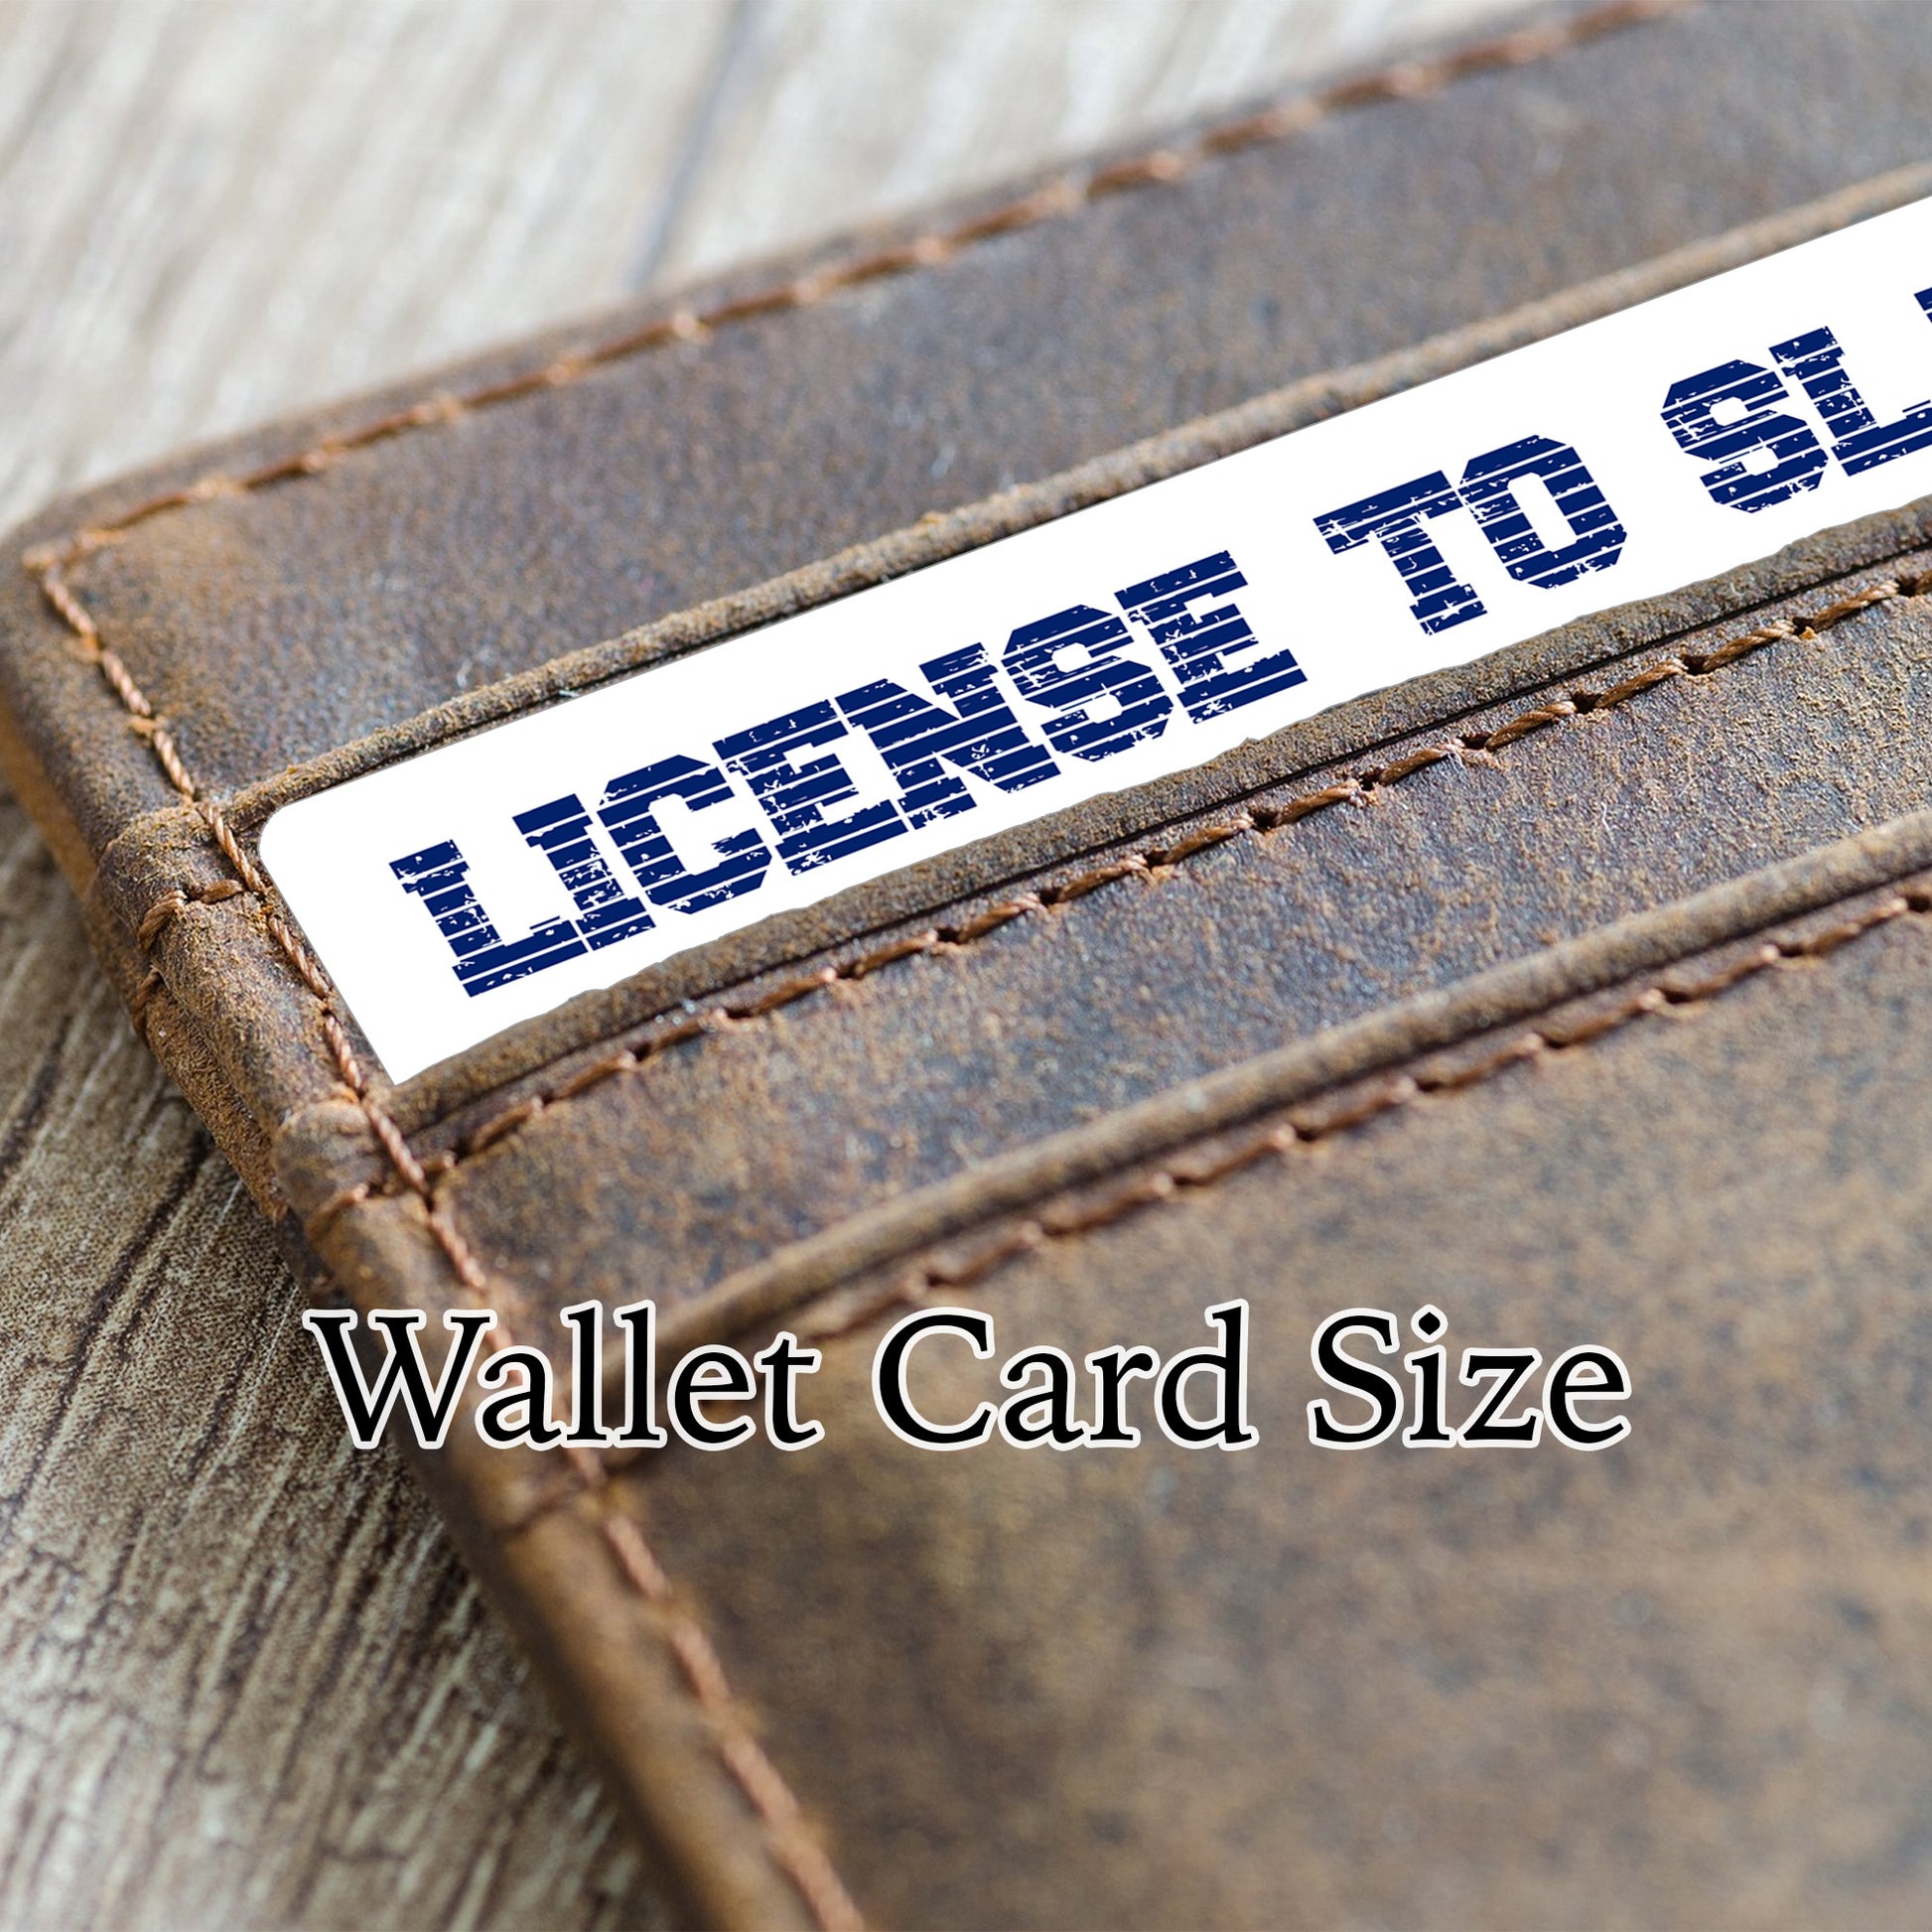 Polyamorous pride personalised license to slay card